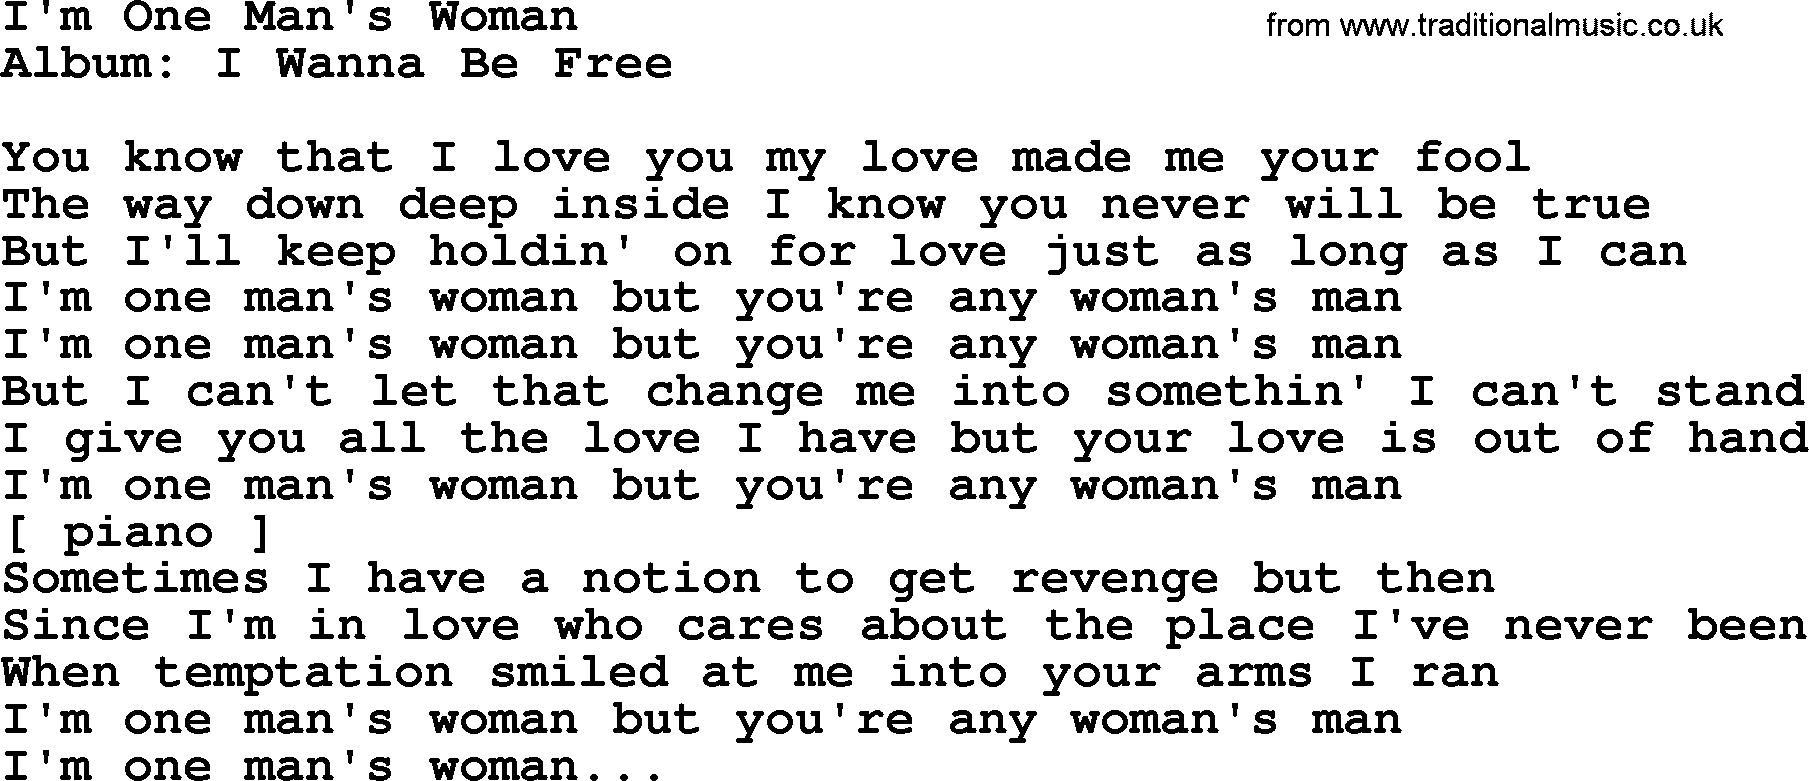 Loretta Lynn song: I'm One Man's Woman lyrics